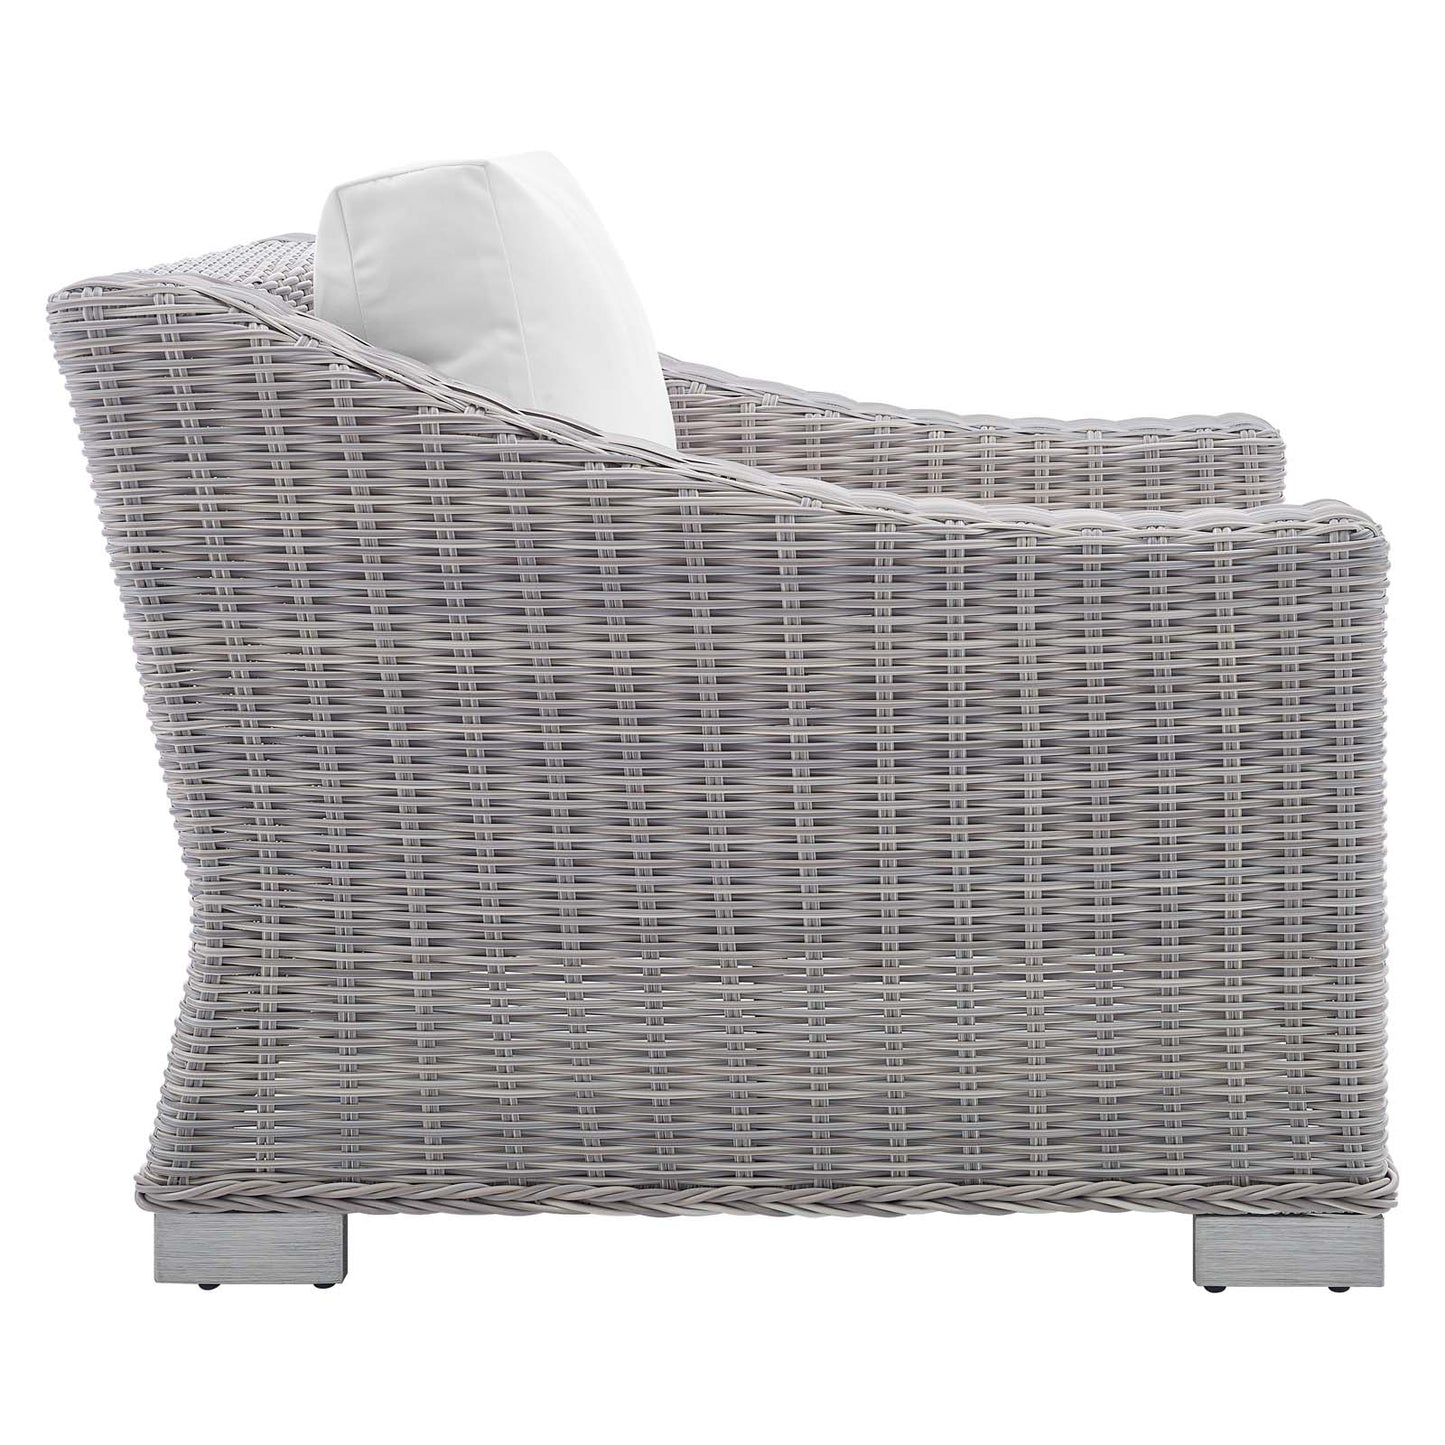 Conway Sunbrella® Outdoor Patio Wicker Rattan 4-Piece Furniture Set Light Gray White EEI-4359-LGR-WHI